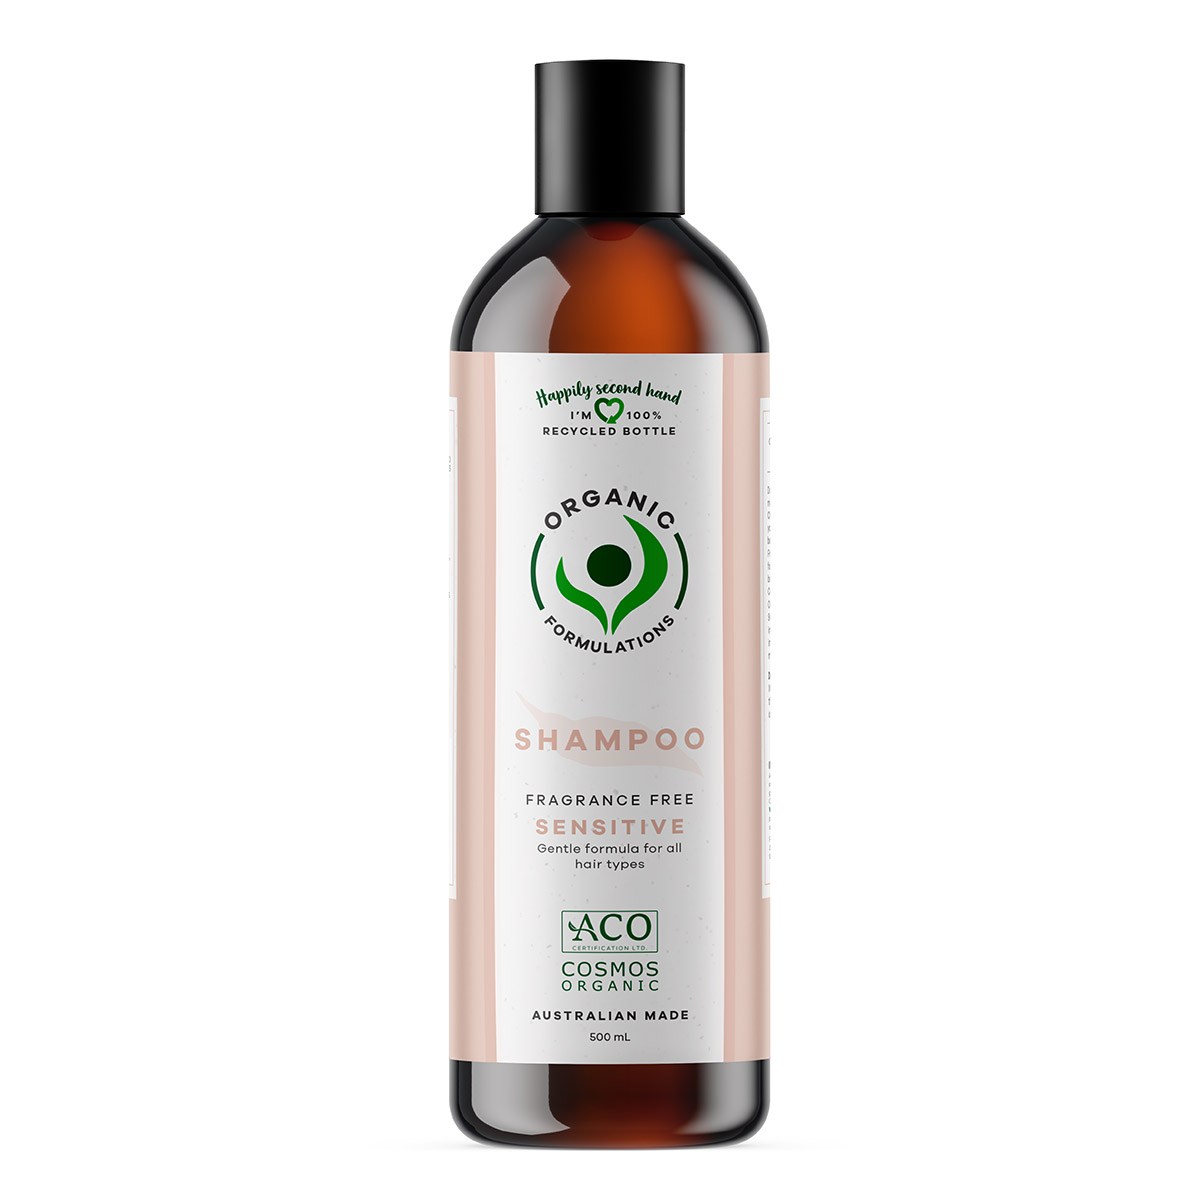 Organic Formulations Shampoo - Fragrance Free Sensitive